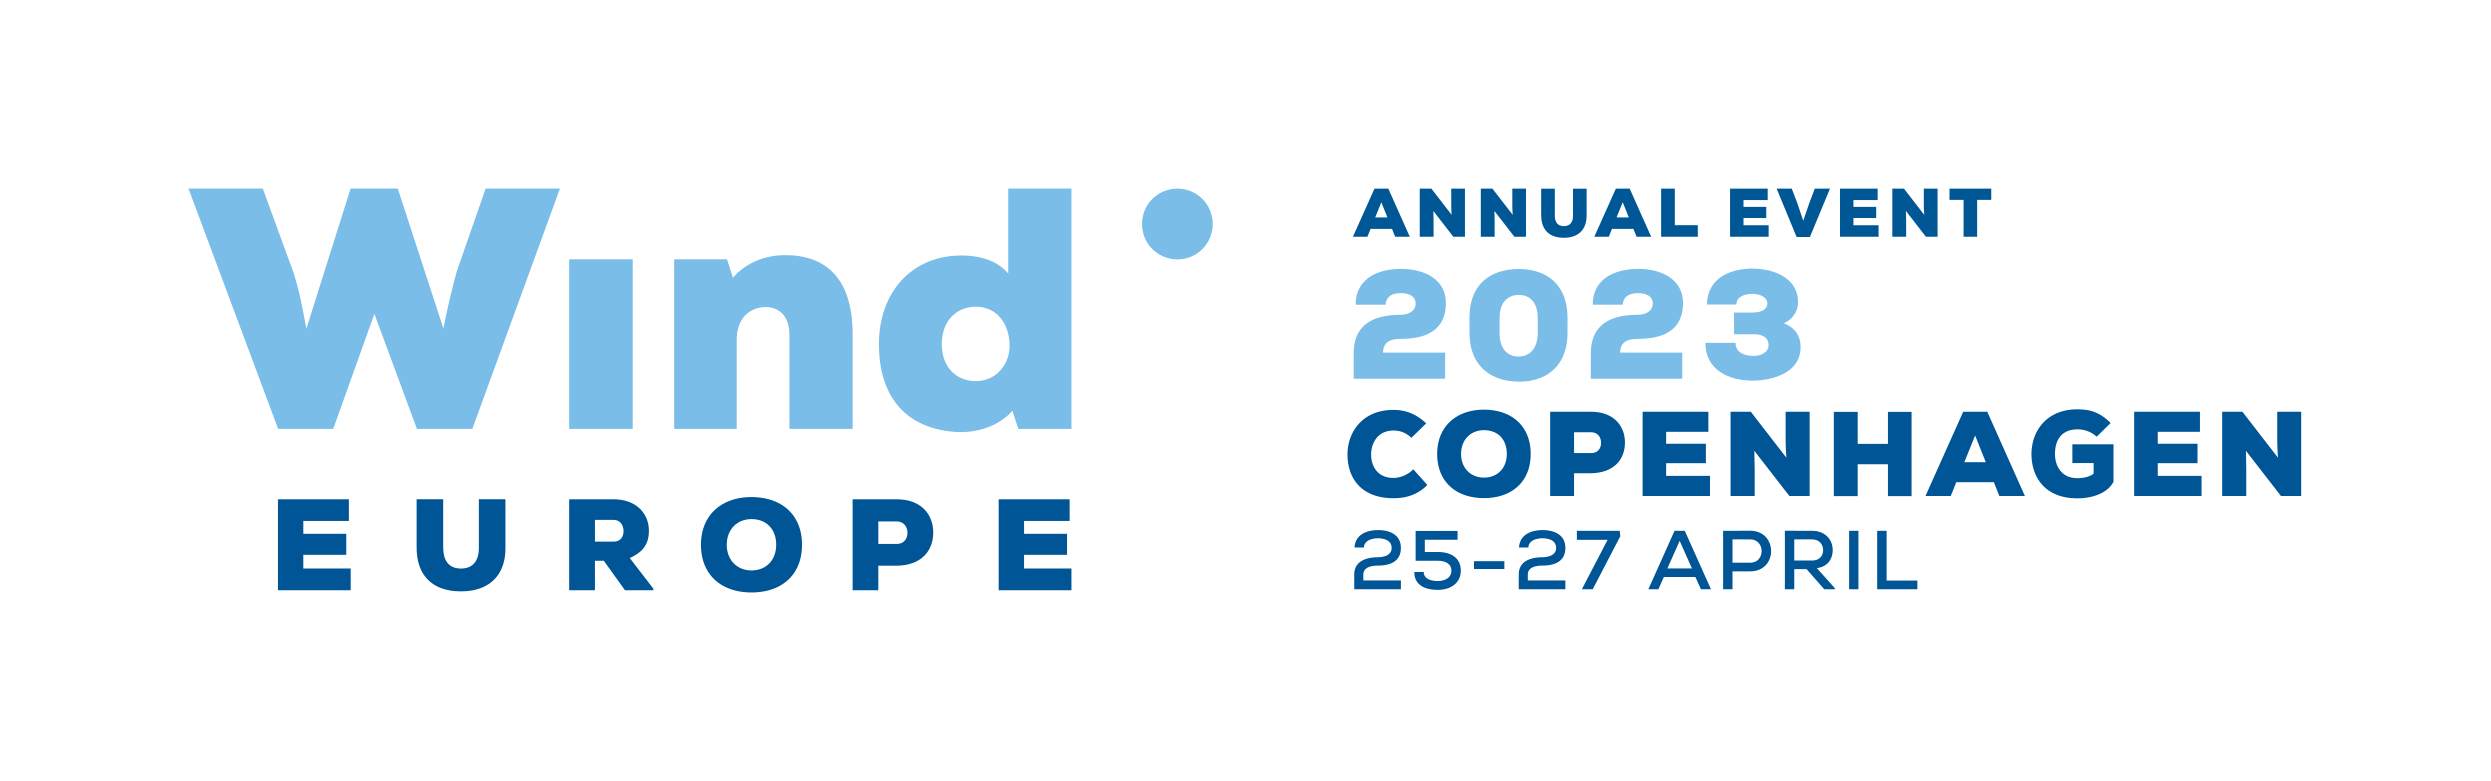 WindEurope Annual Event 2023